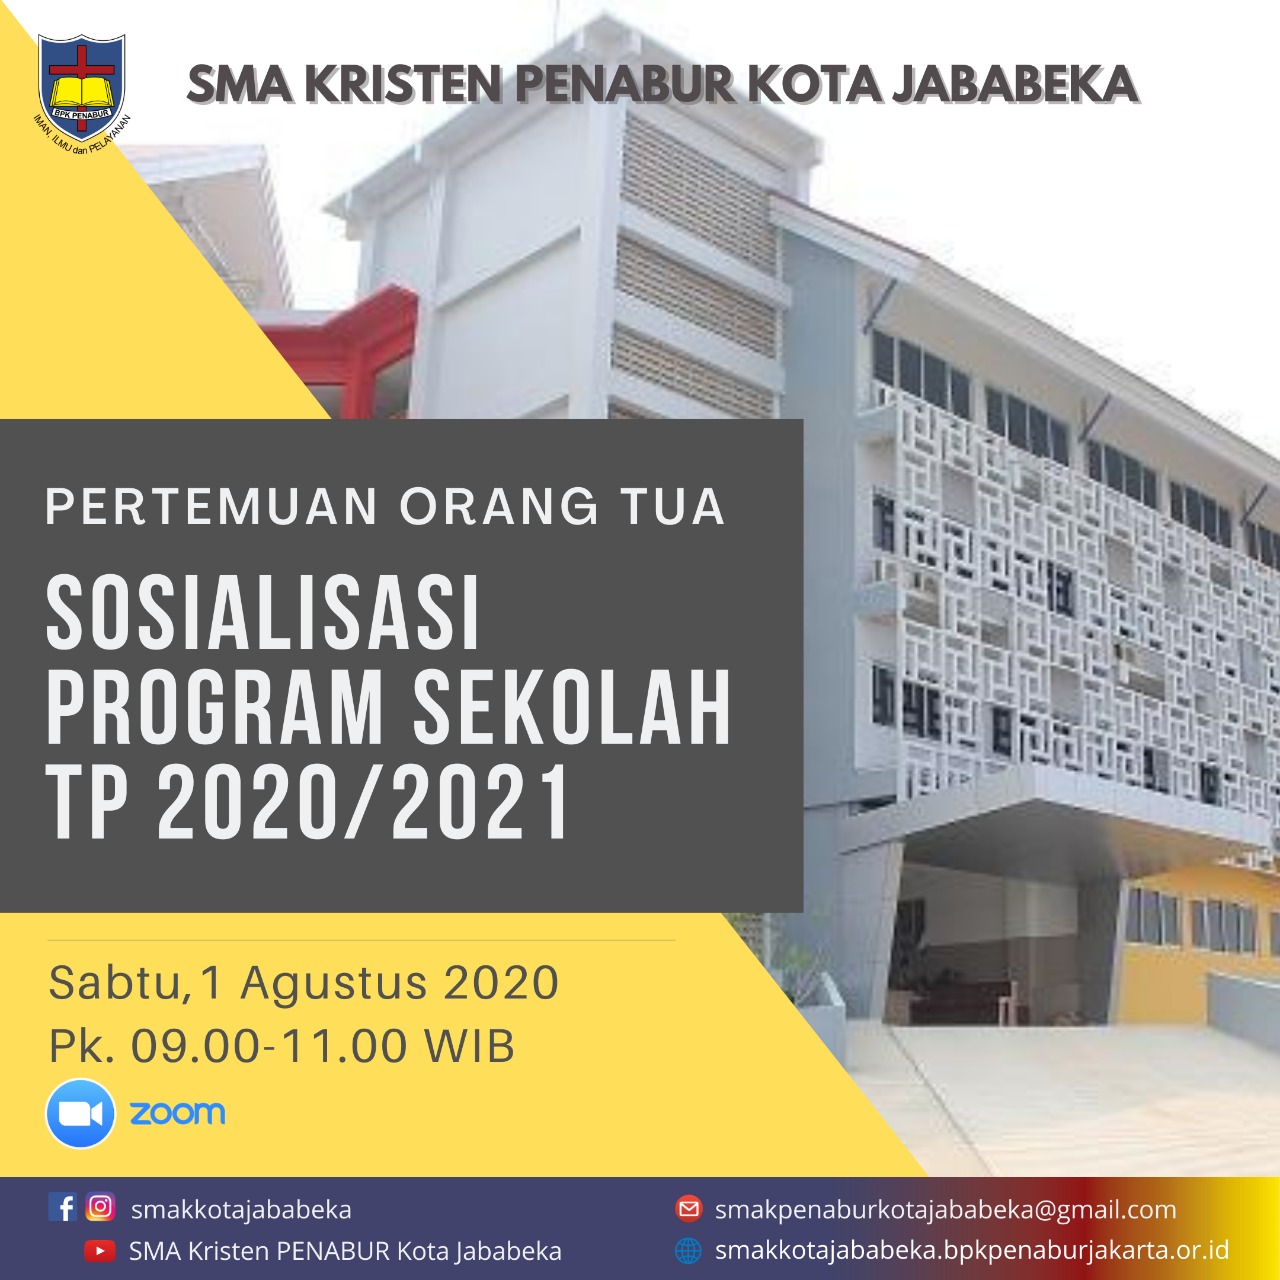 POT Program Sosialisasi Sekolah TP 2020/2021